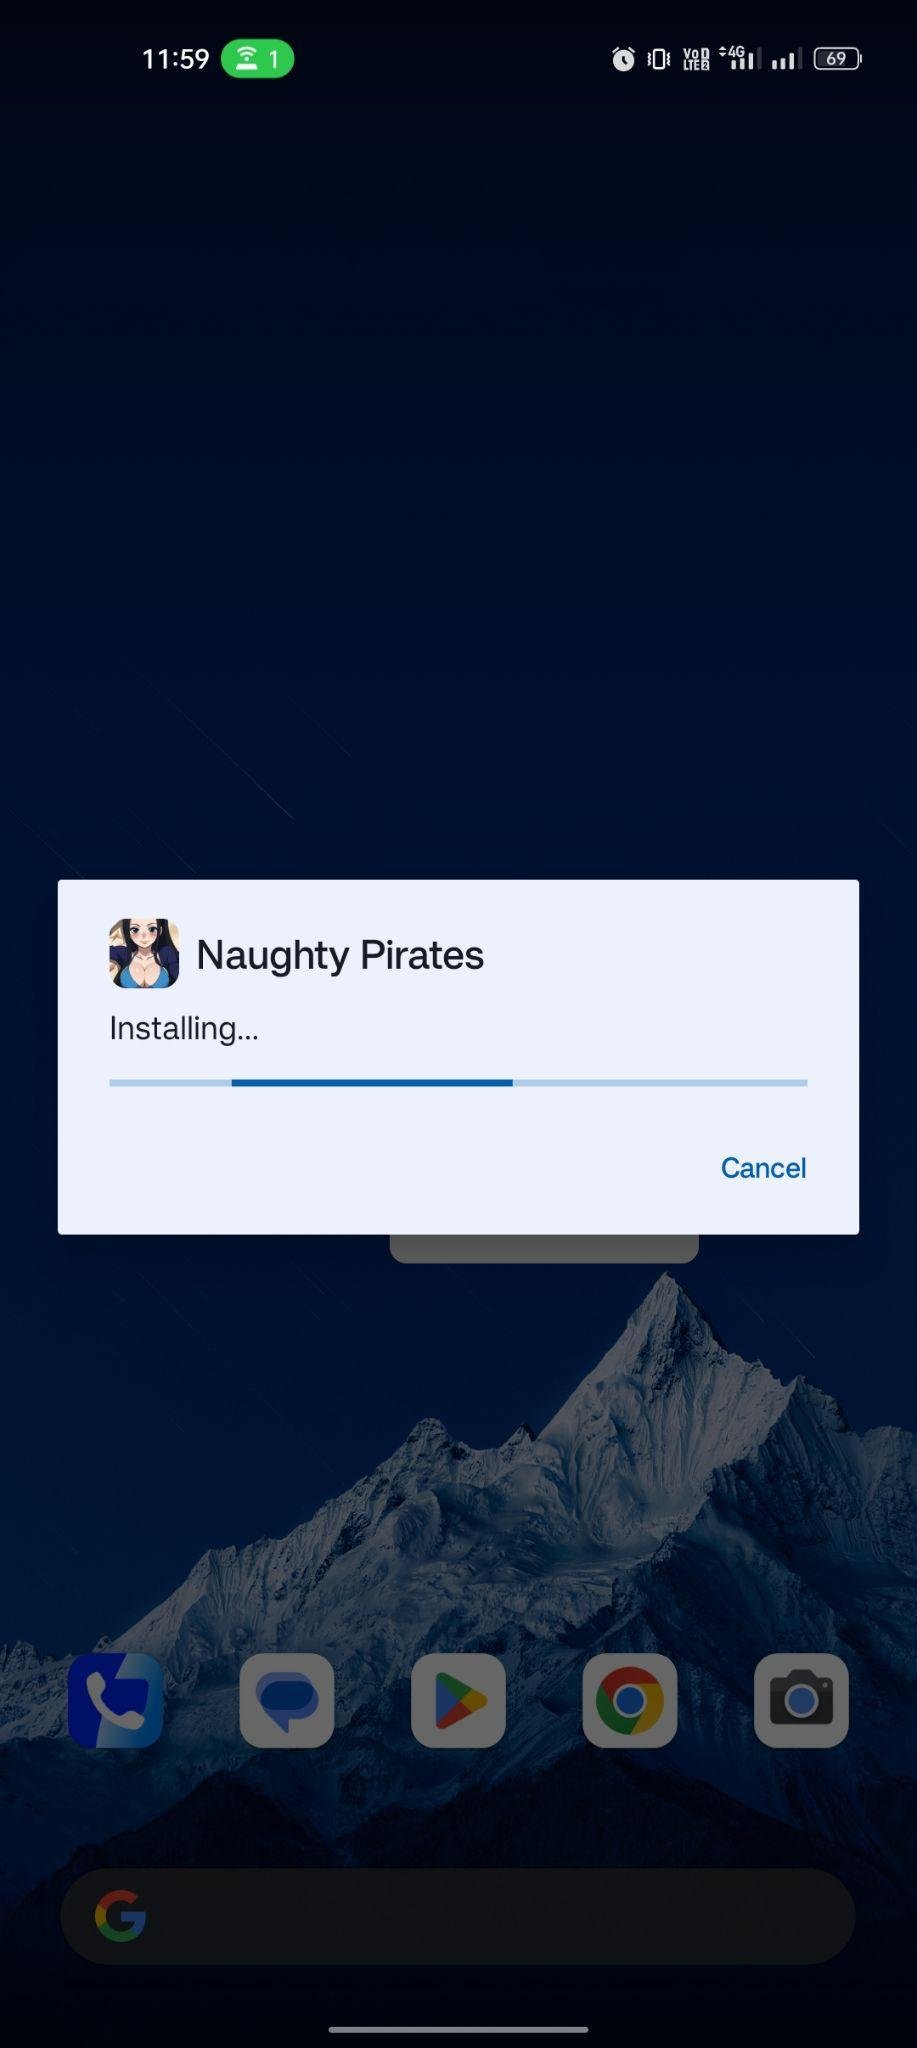 Naughty Pirates apk installing